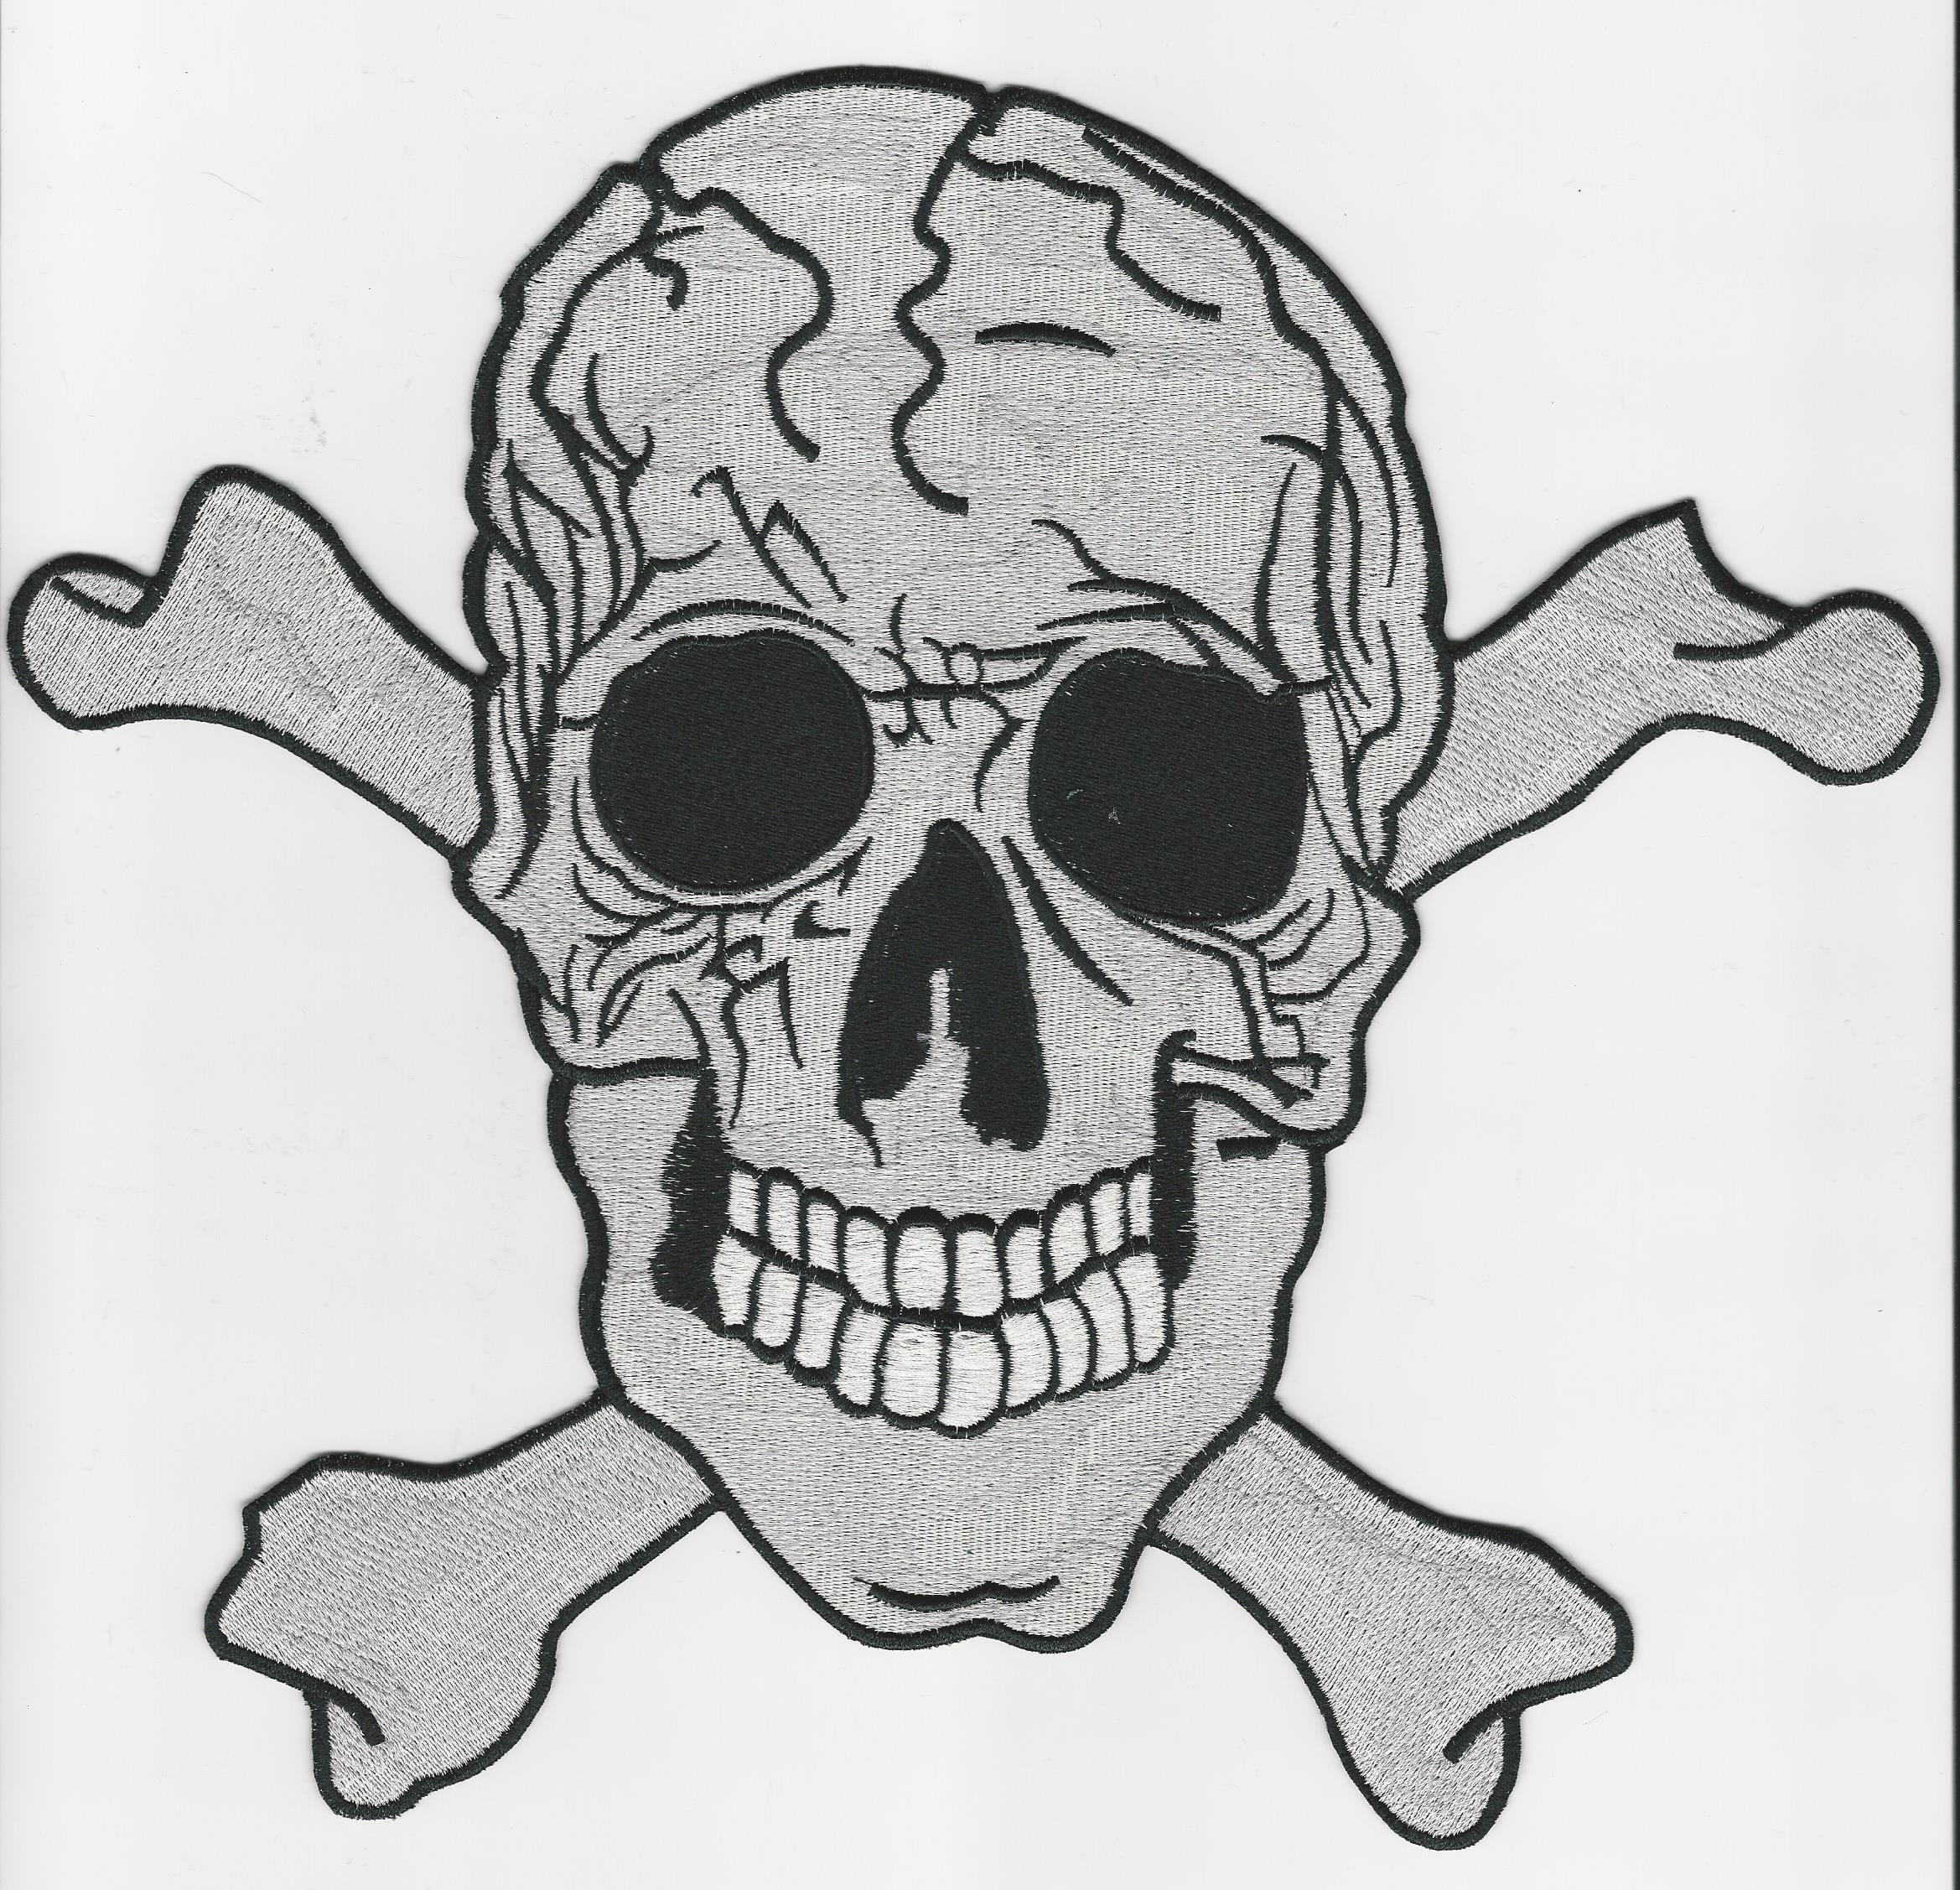 Skull and Cross Bones back patch